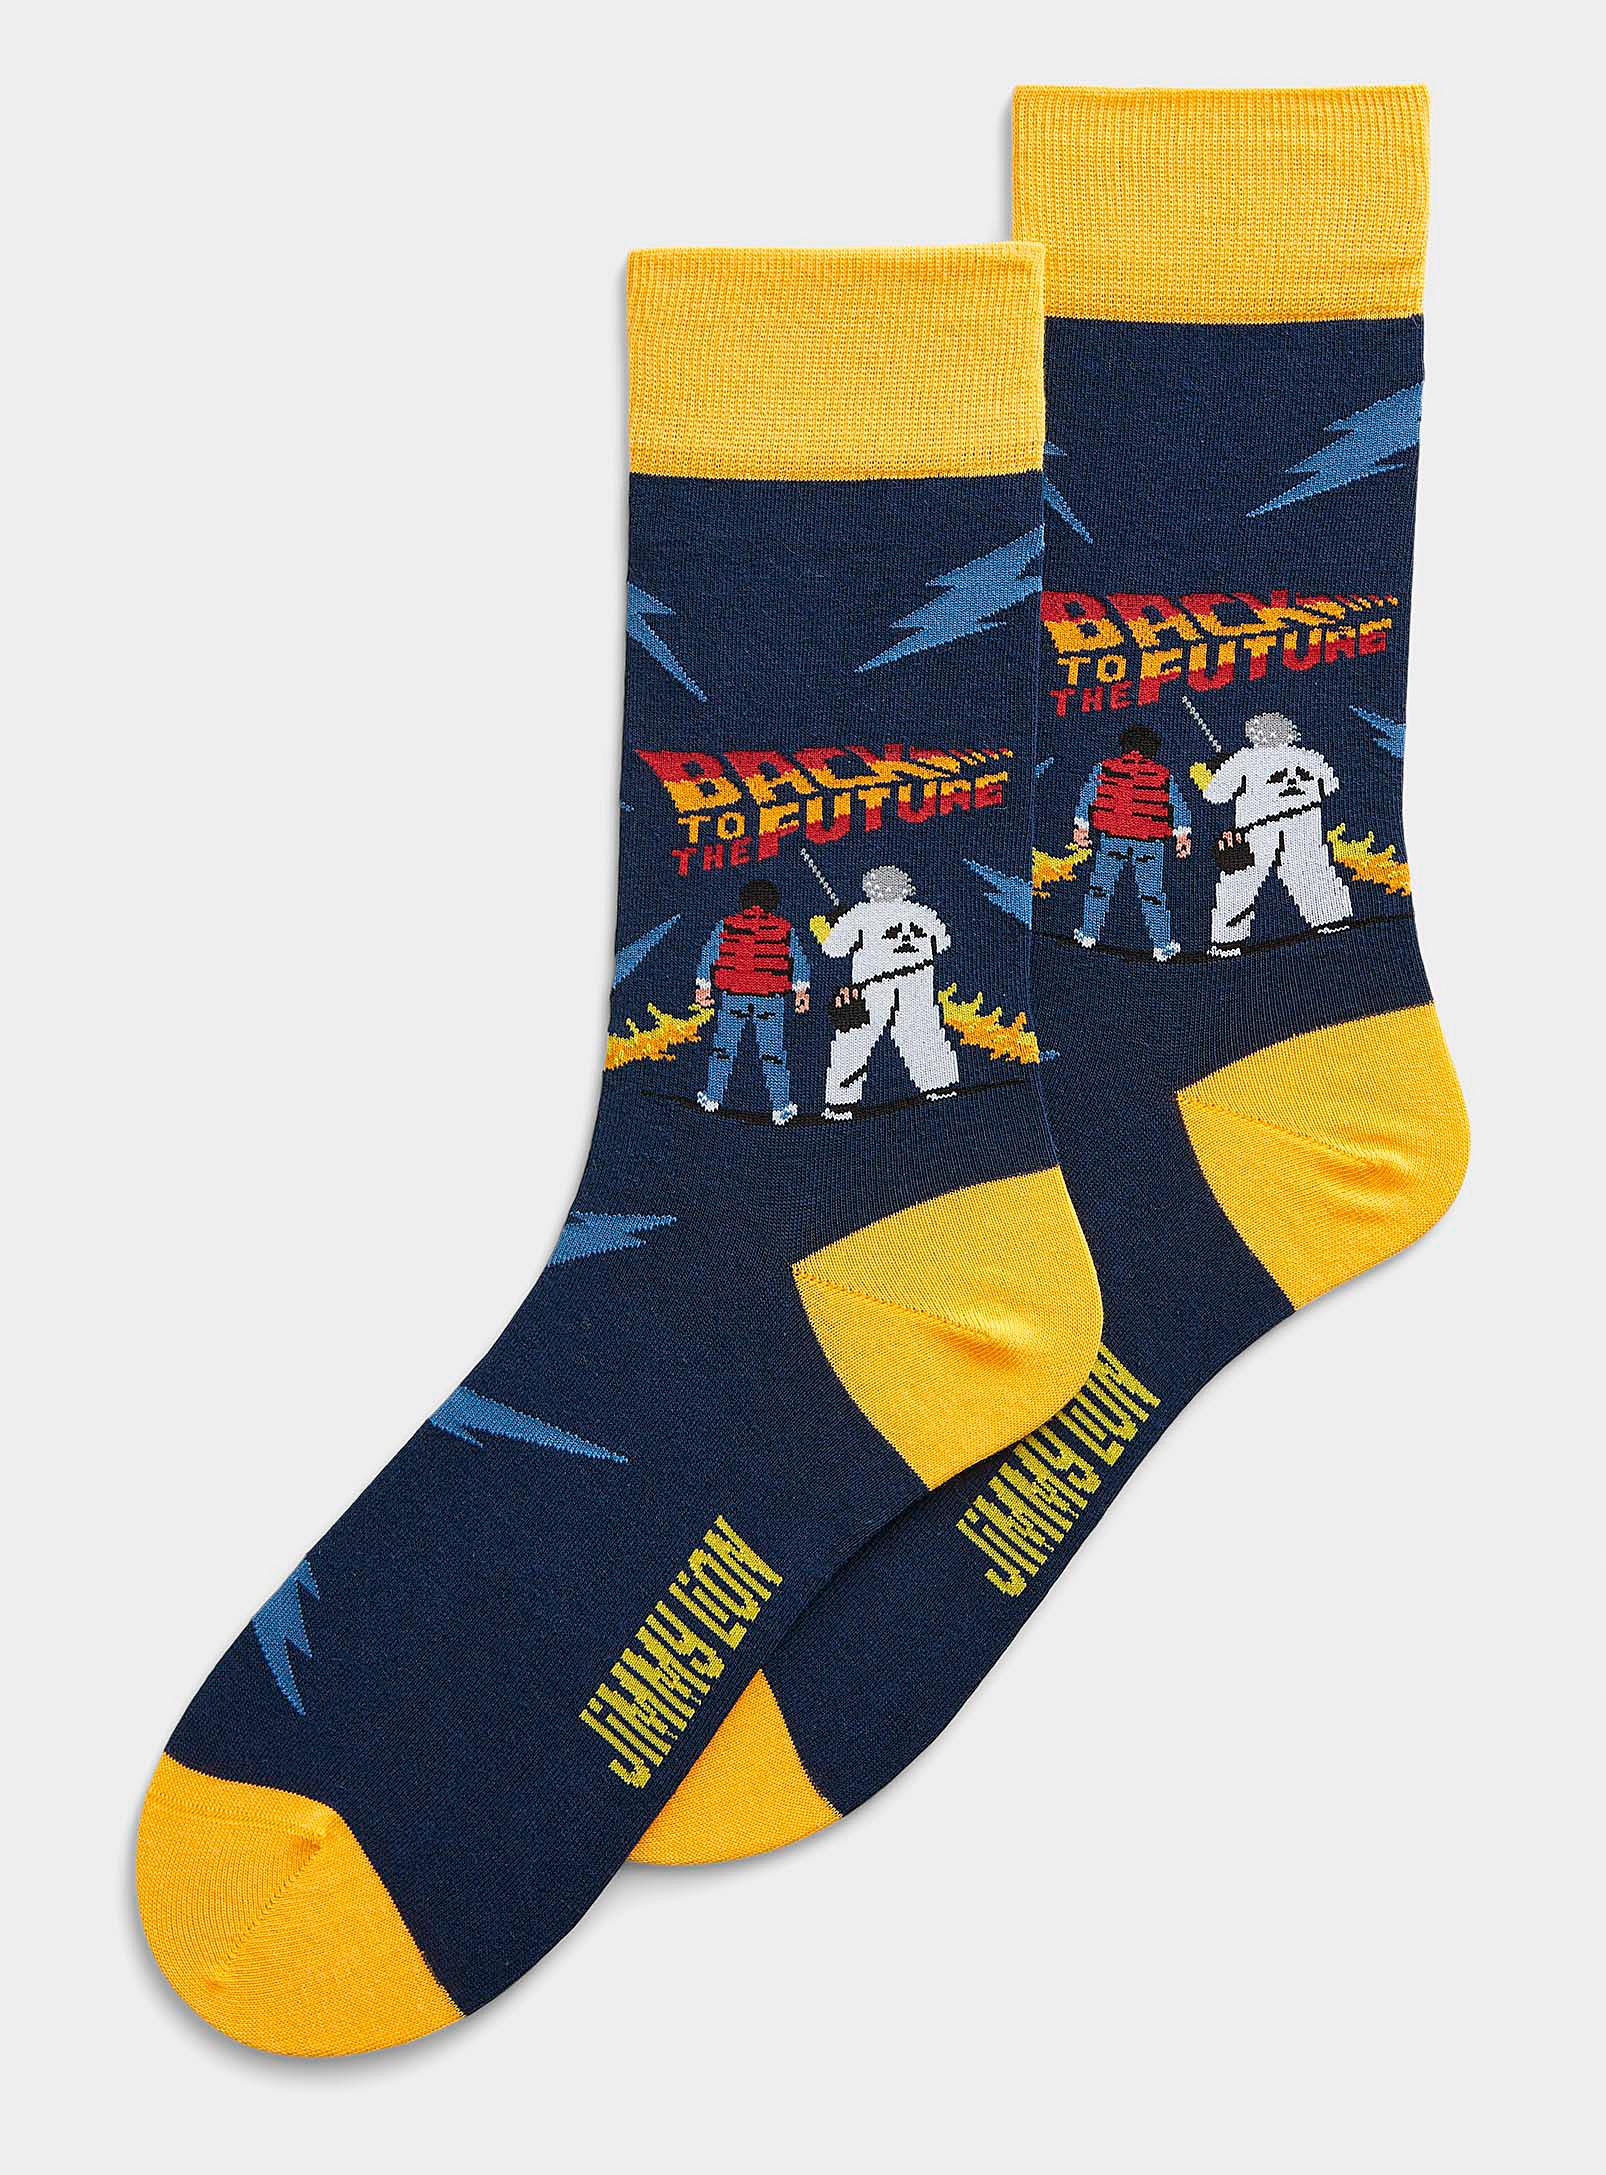 Jimmy Lion - Men's Outatime socks